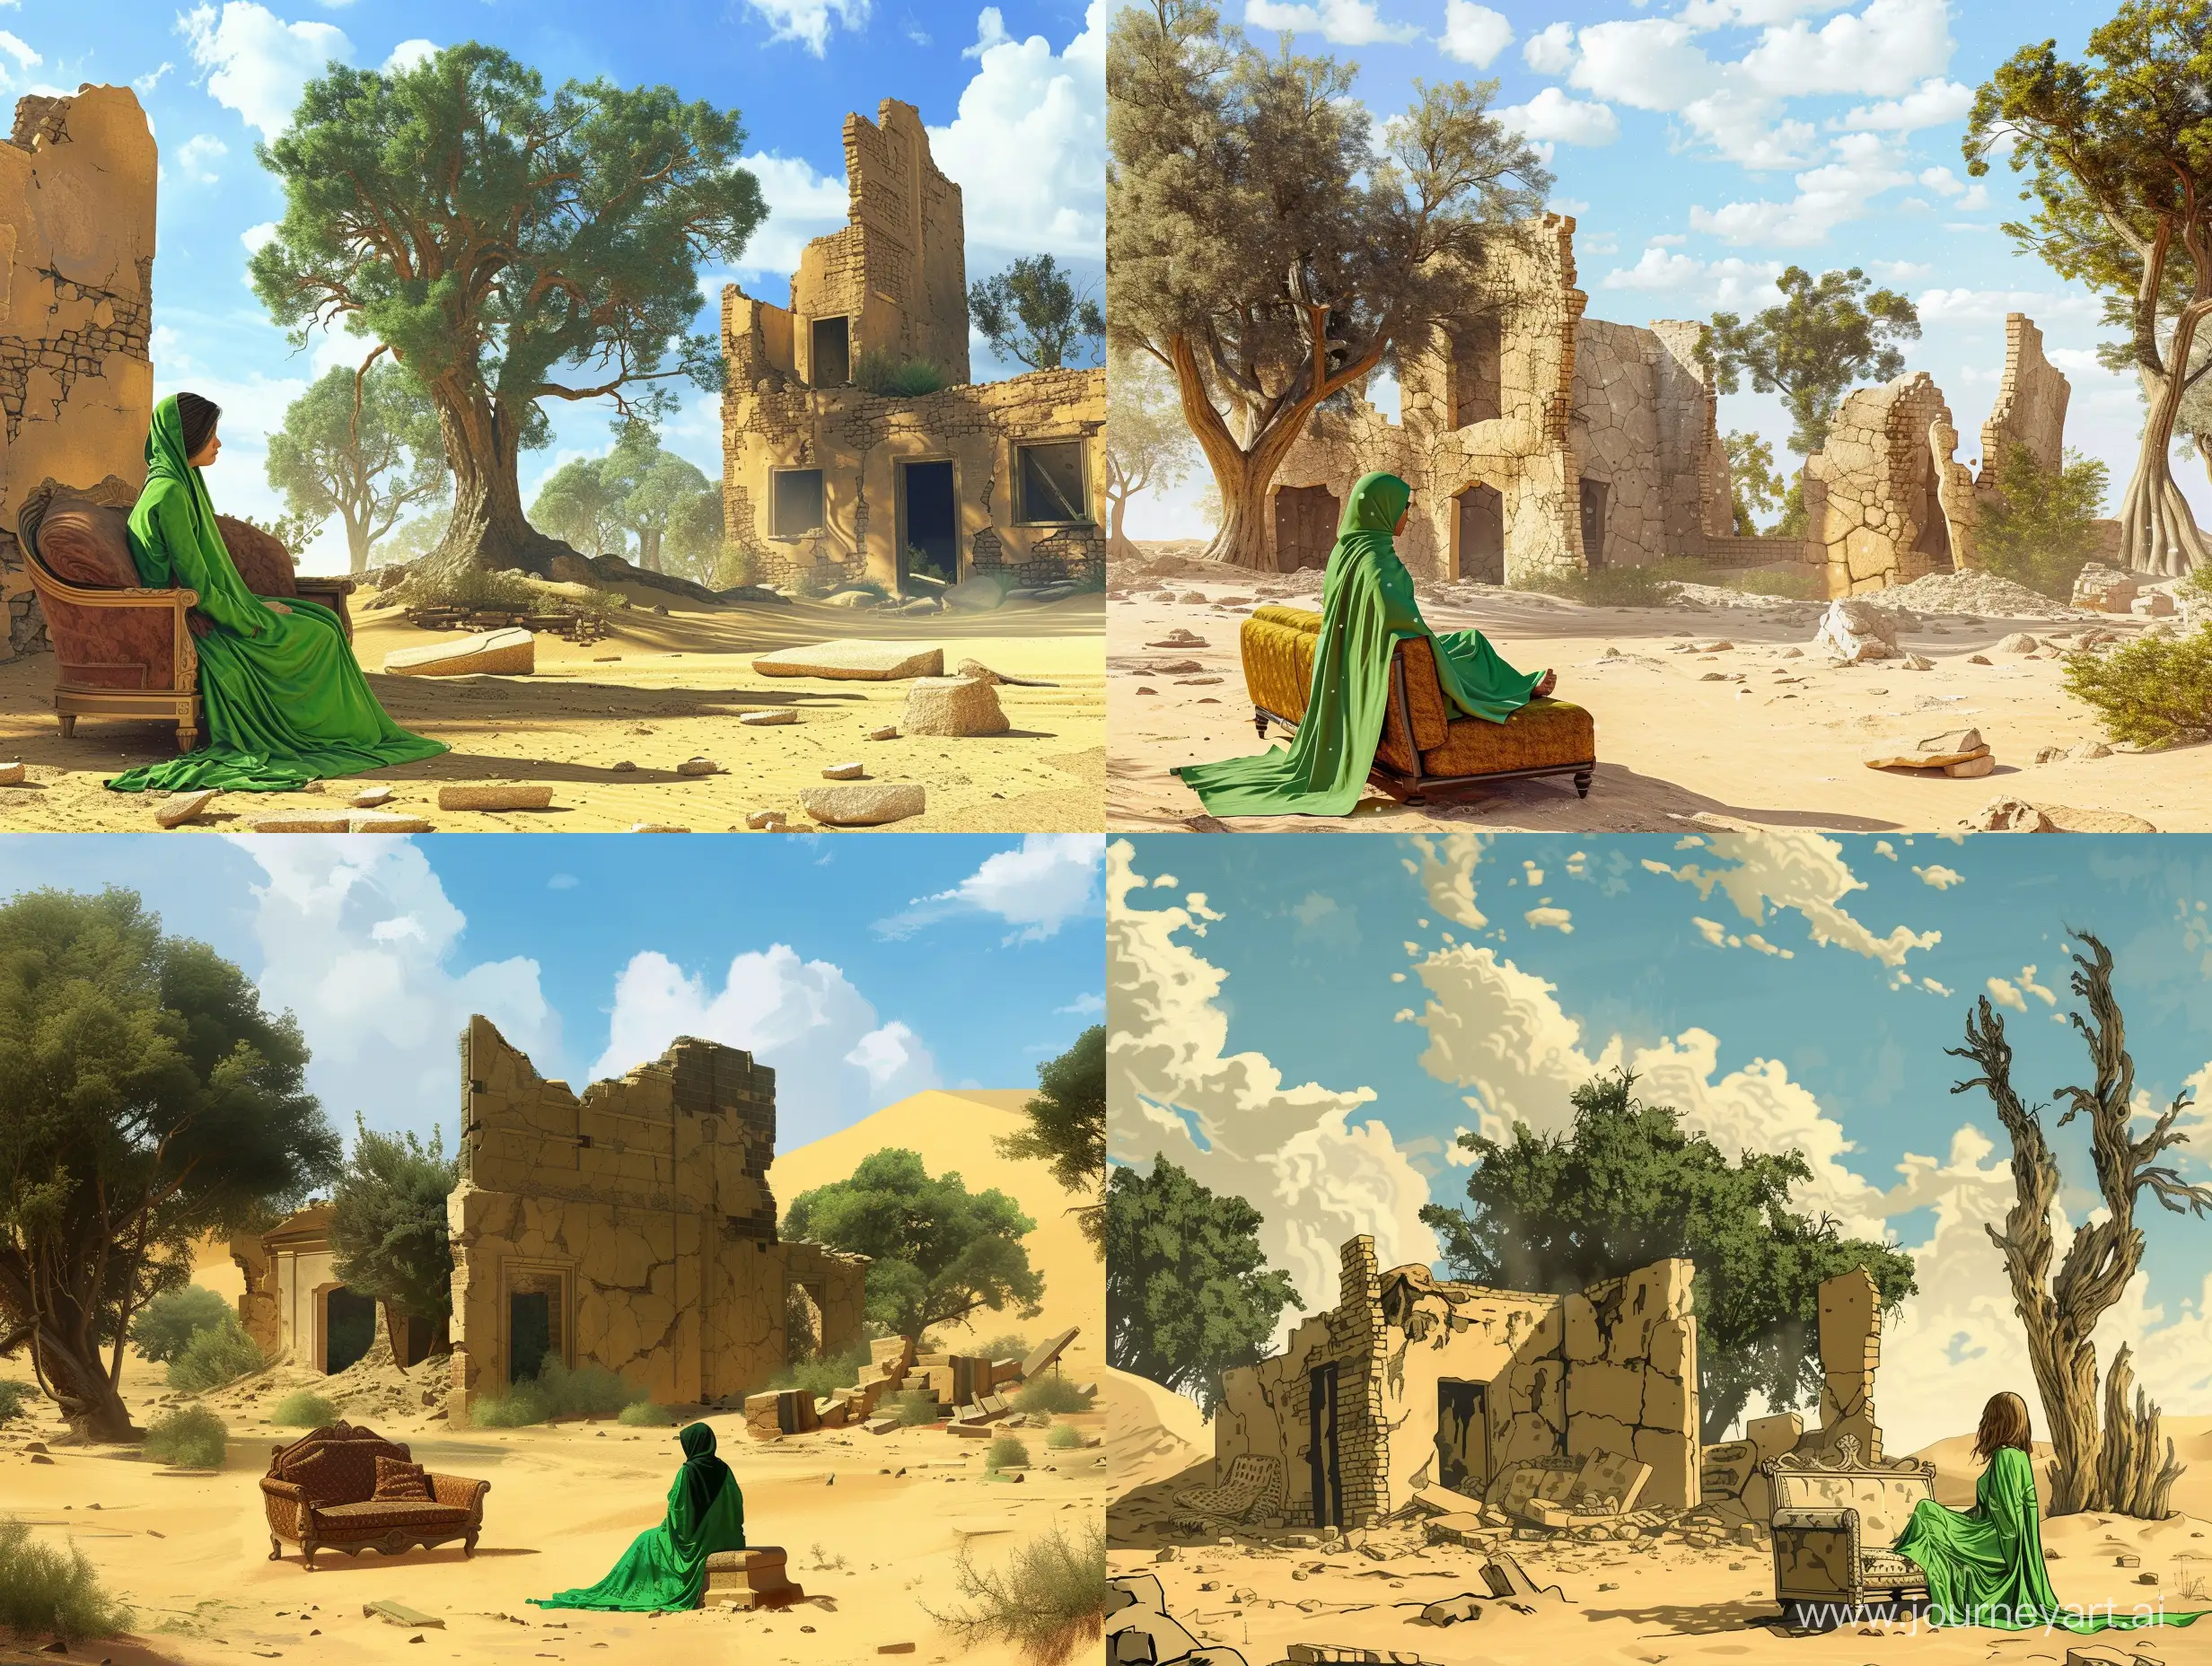 Desert-Ruin-Woman-in-Green-Contemplates-Amidst-Nature